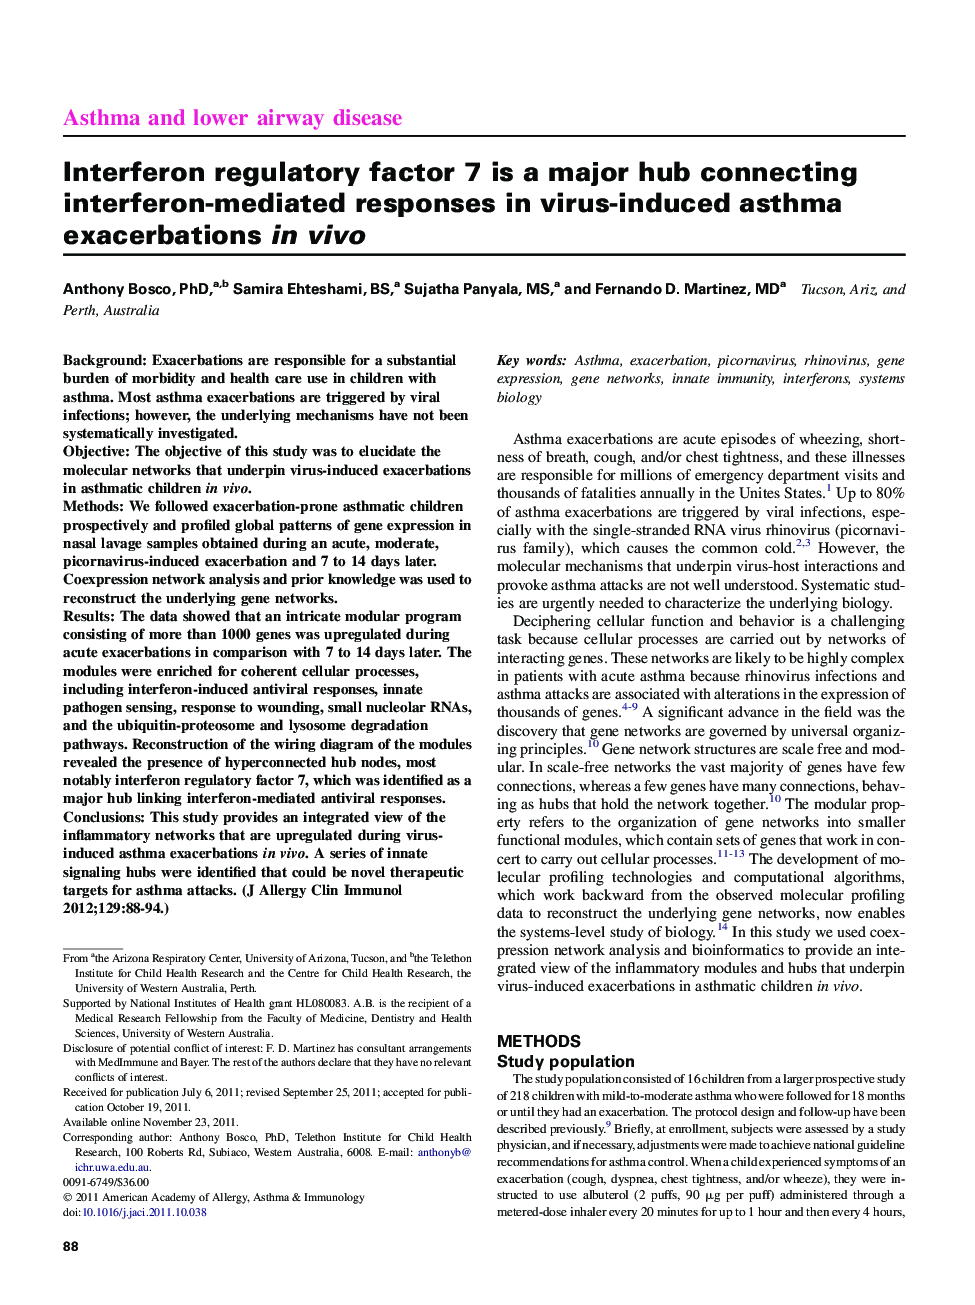 Interferon regulatory factor 7 is a major hub connecting interferon-mediated responses in virus-induced asthma exacerbations in vivo 